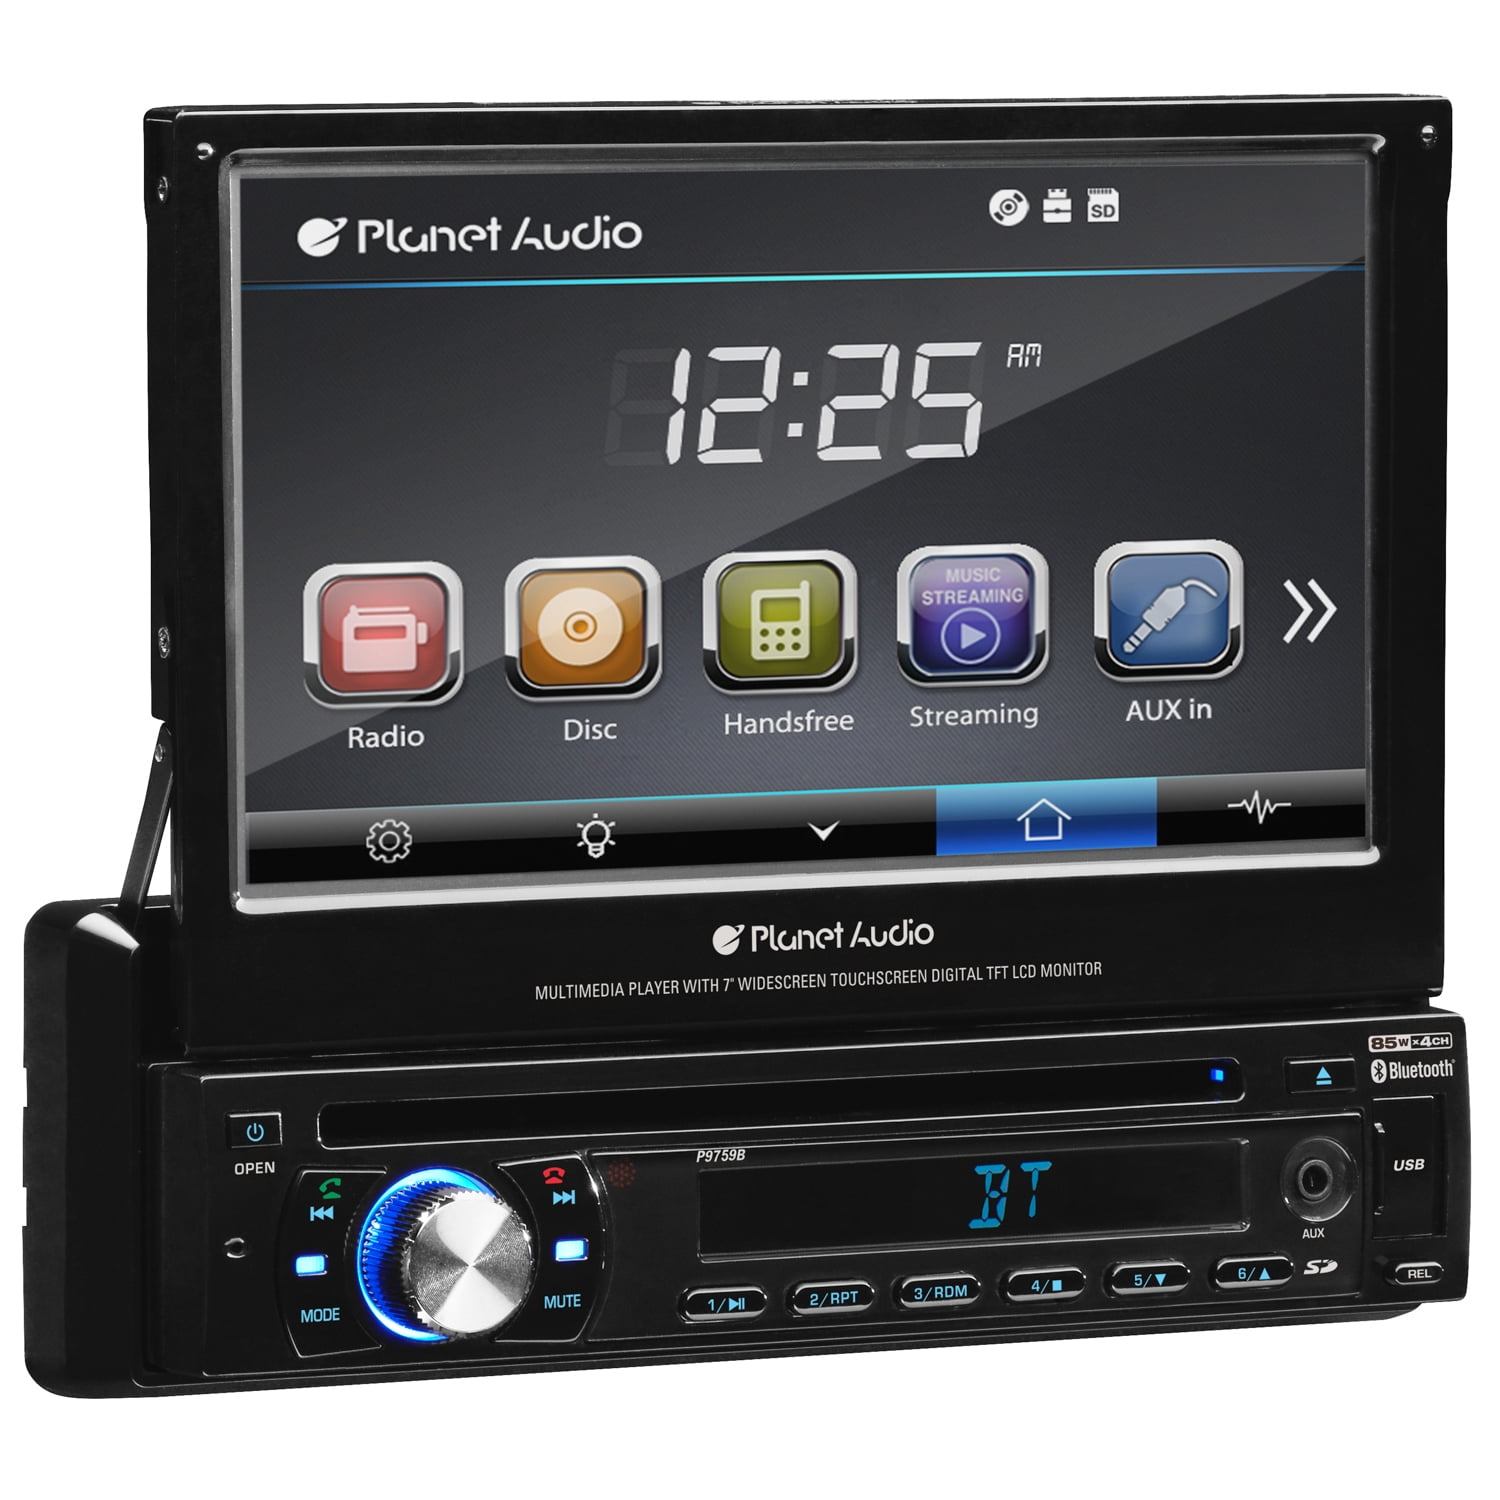 Planet Audio P9759B 7” Touchscreen Car DVD Player, Bluetooth, DVD